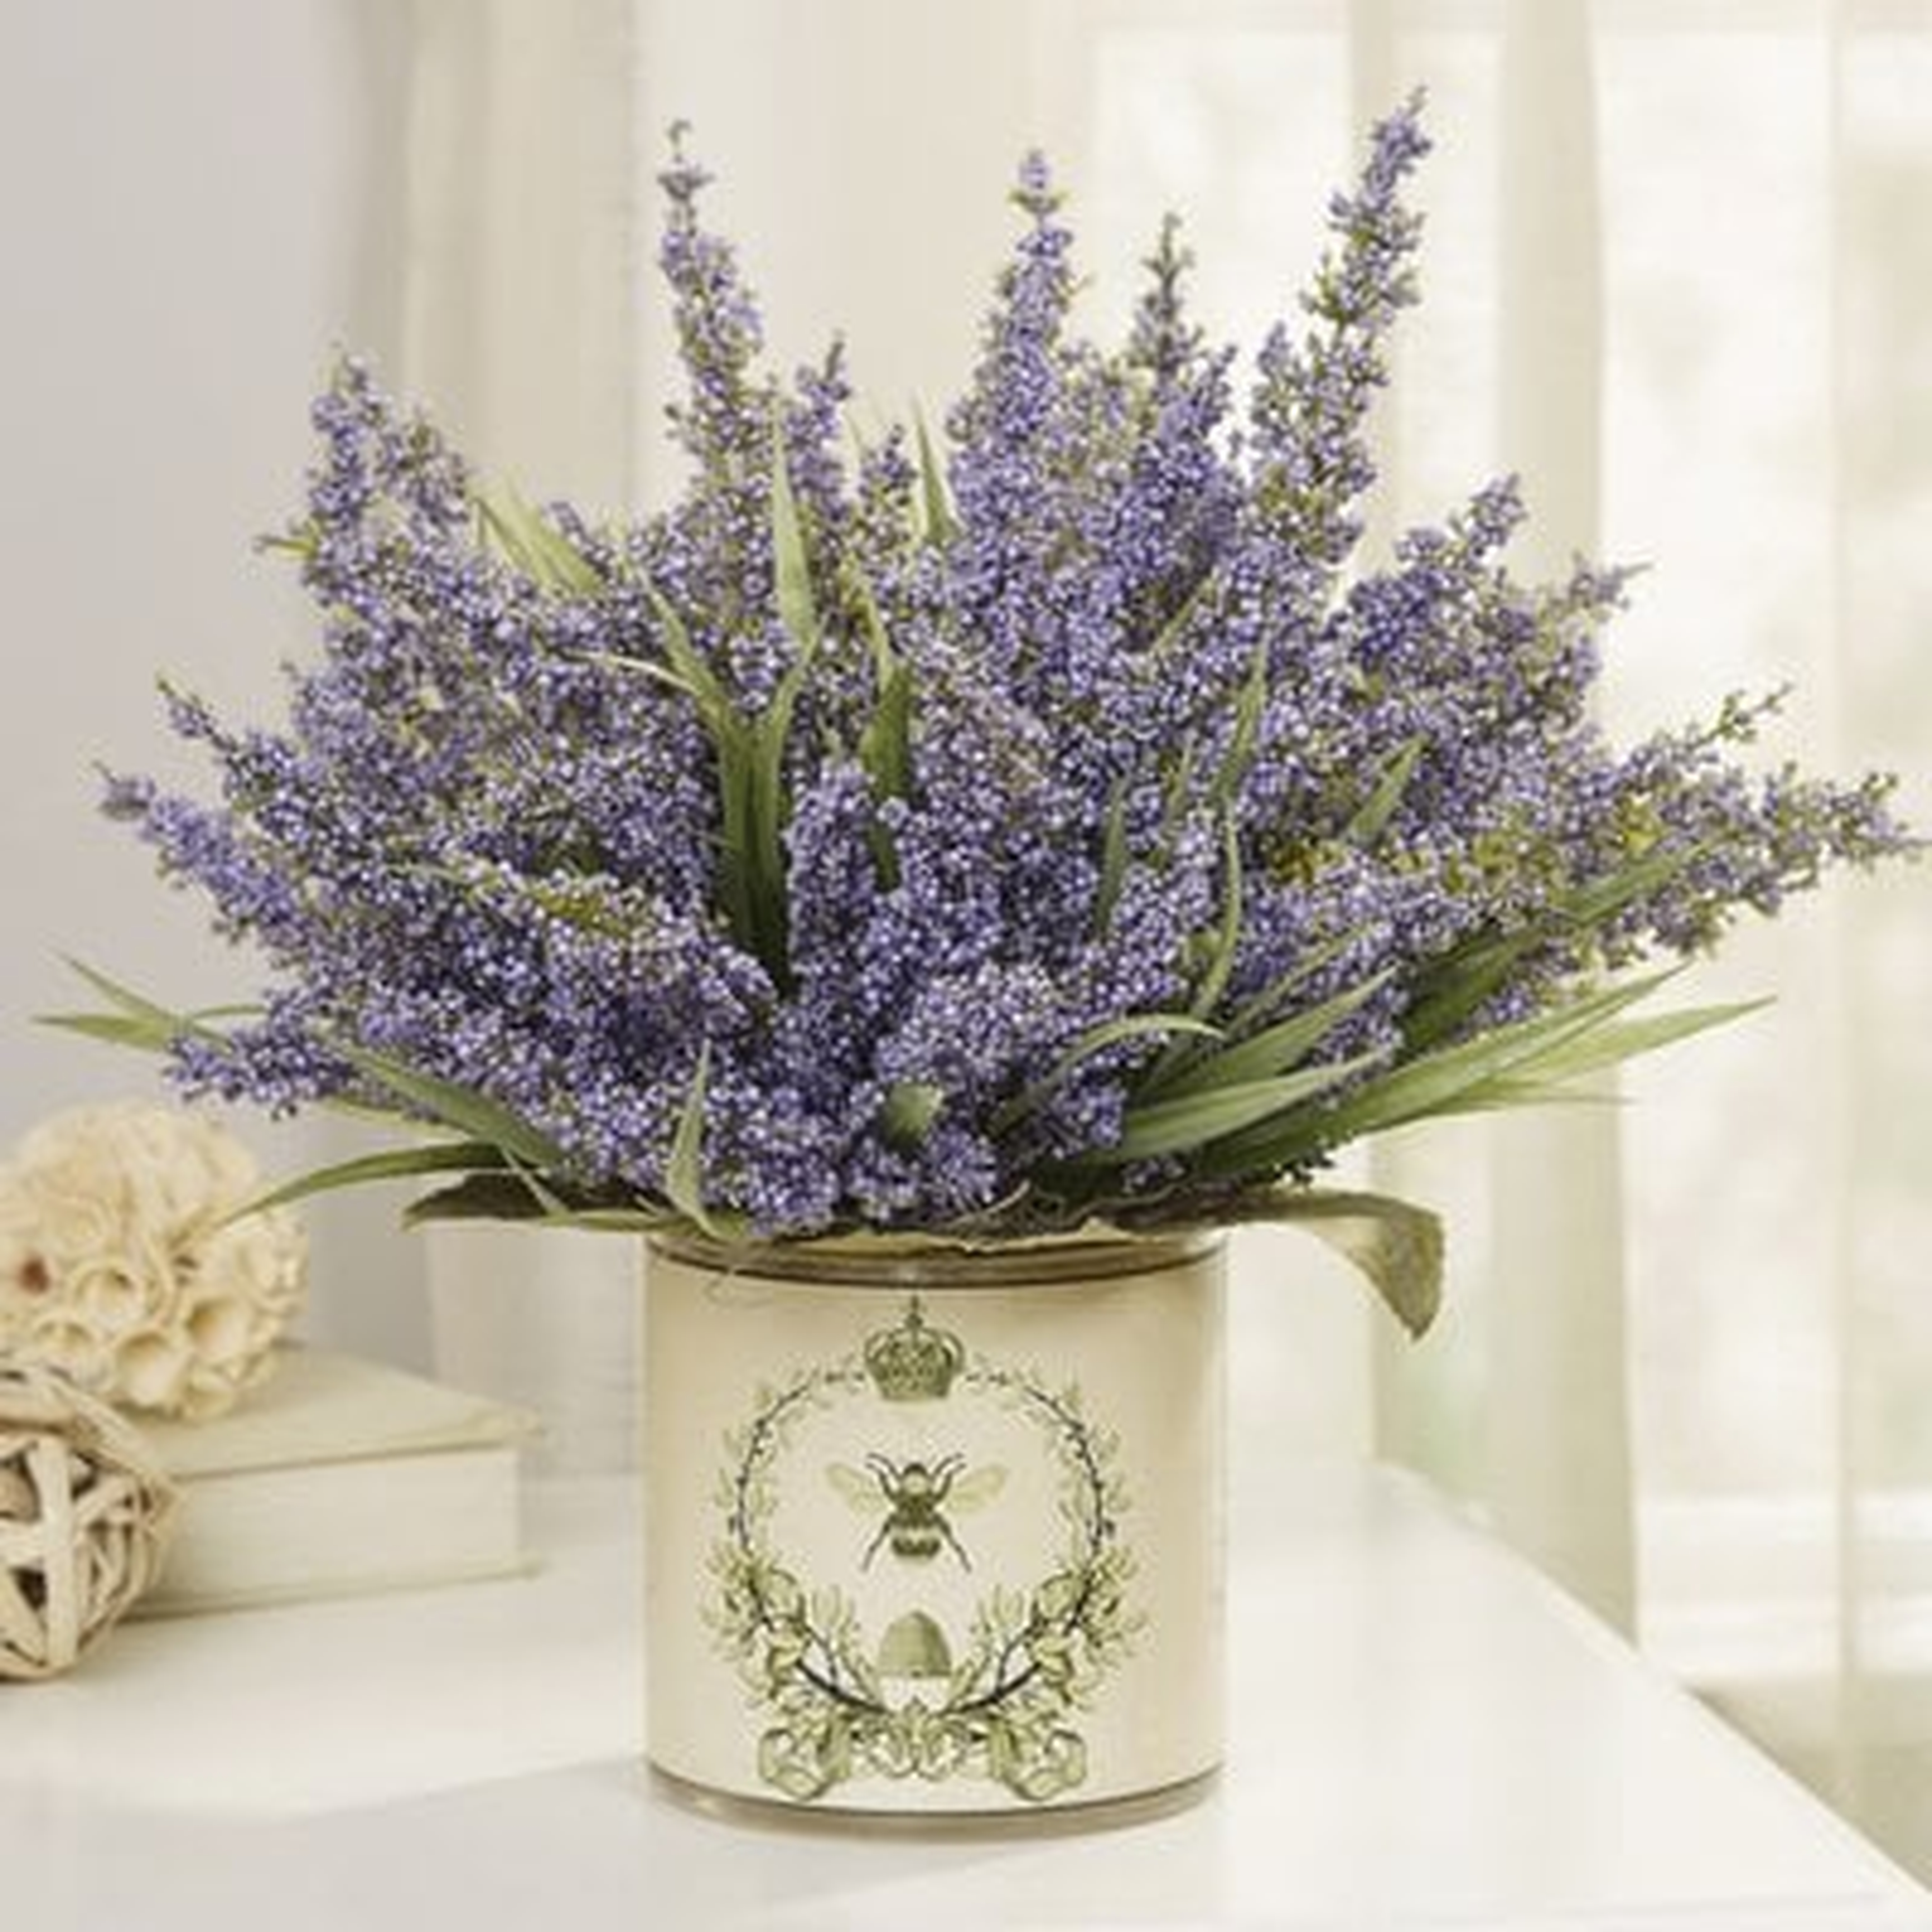 Lavender Centerpiece in Decoupage Pot - Birch Lane